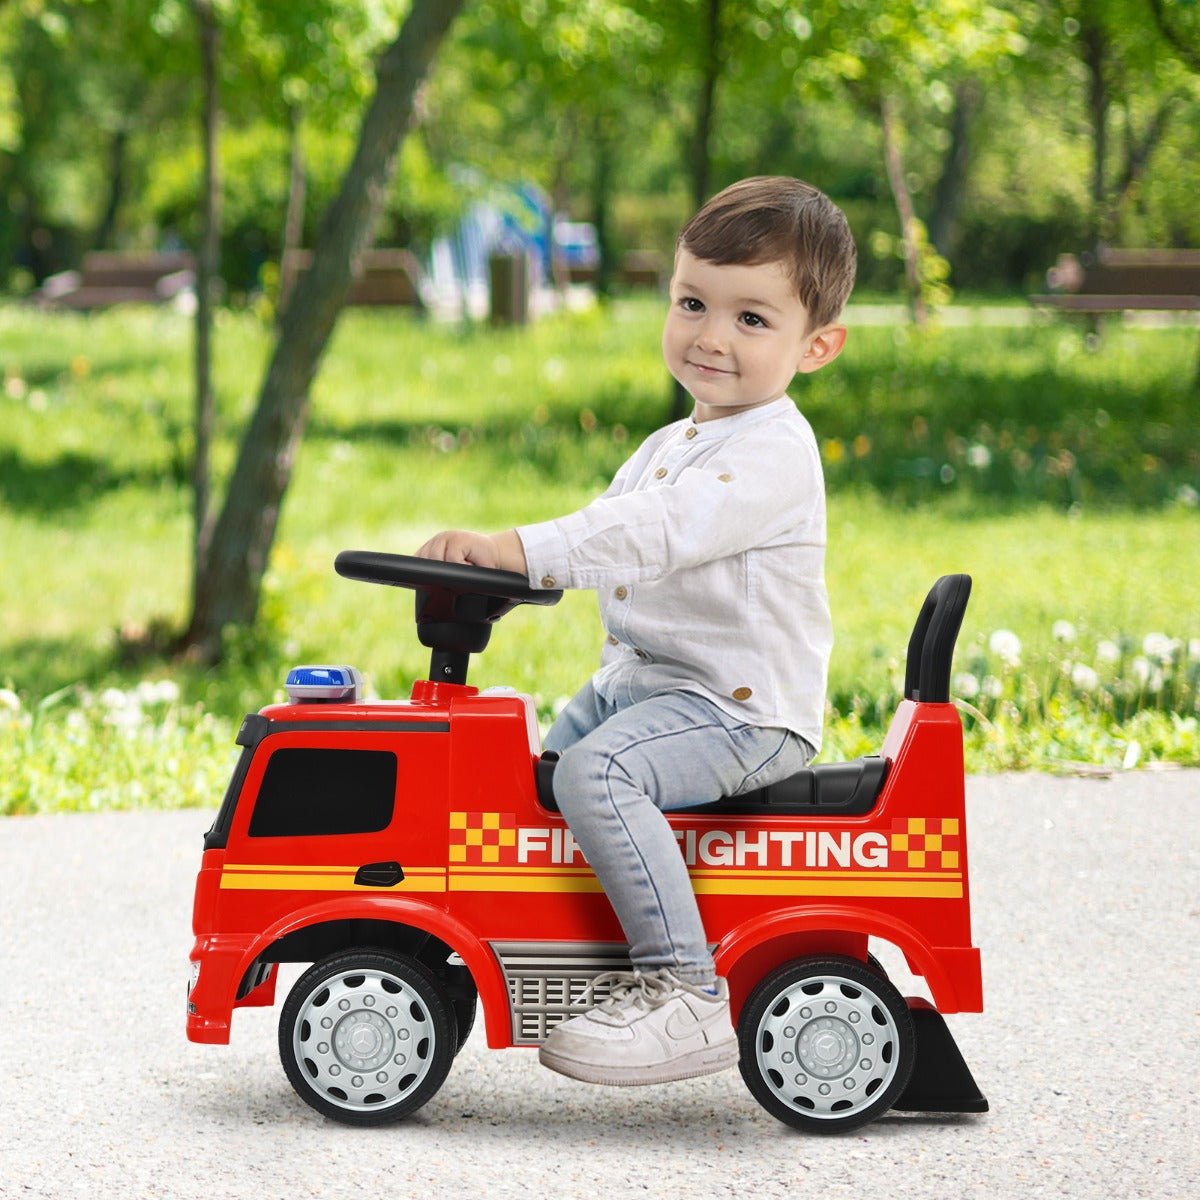 Toddler's Joyride: Licensed Mercedes Benz Kids Ride On Car with Convenient Storage